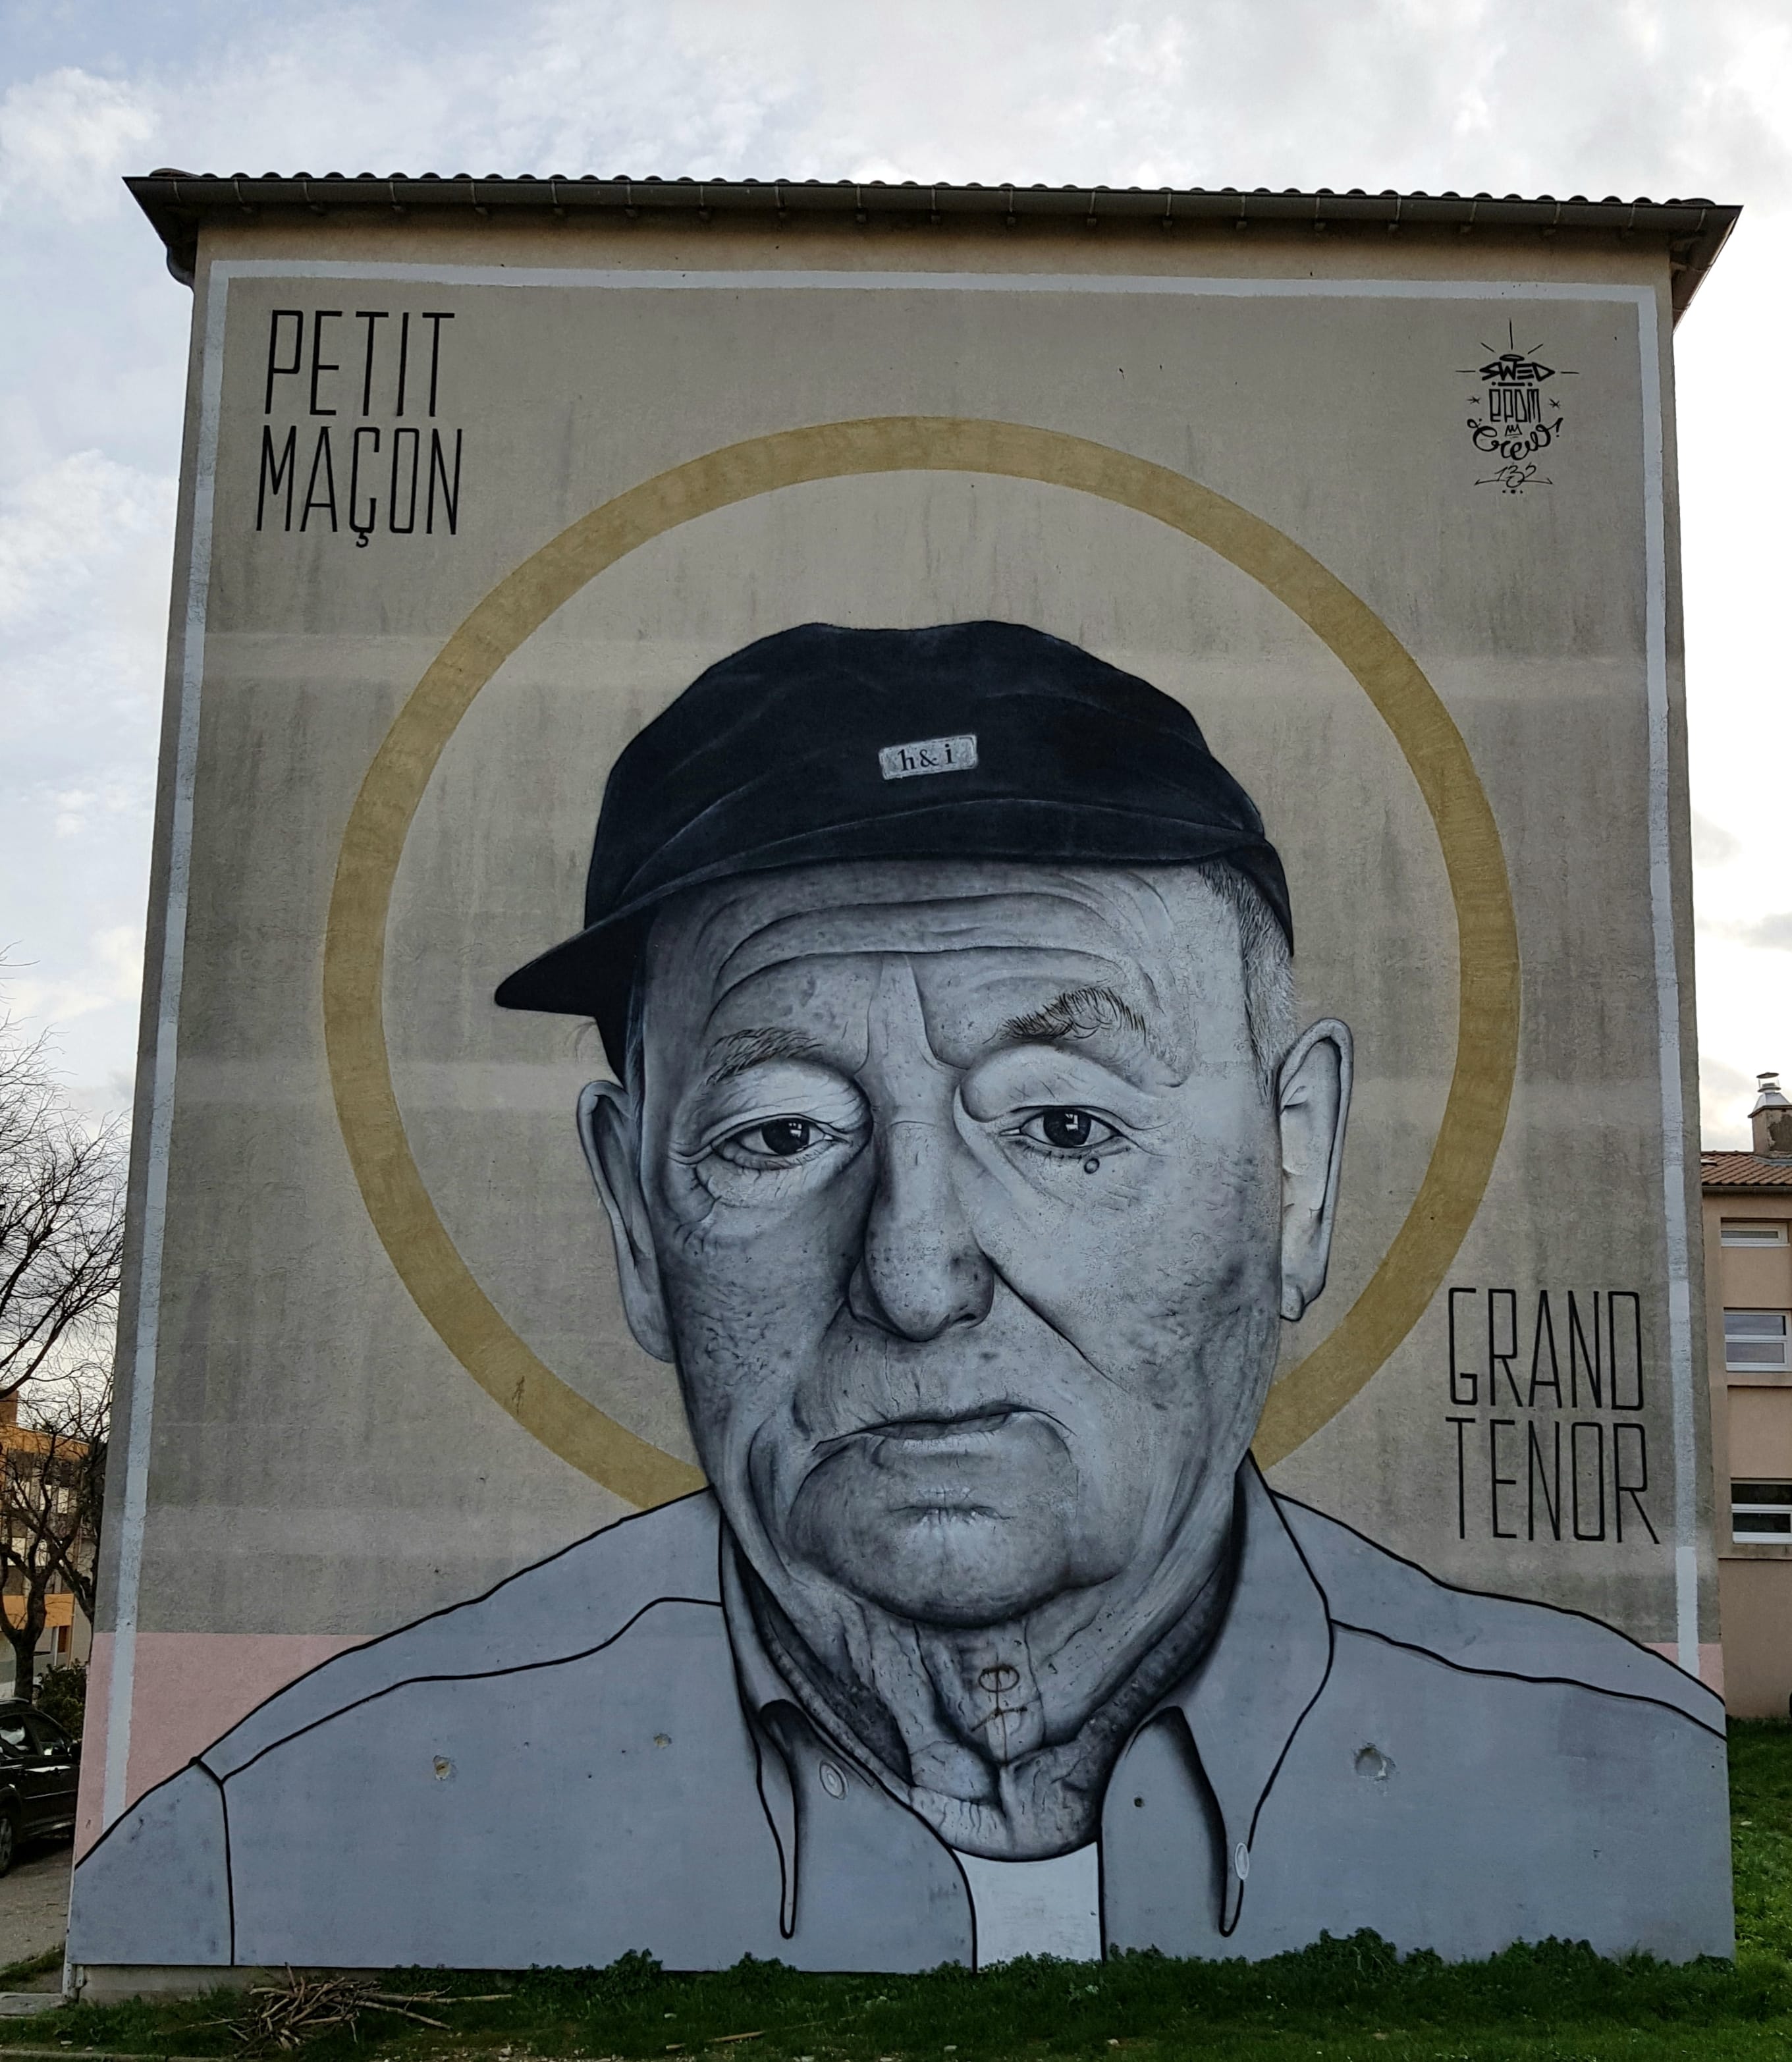 Graffiti 6497 Petit maçon, grand ténor by the artist SWED ONER captured by Mephisroth in Uzès France